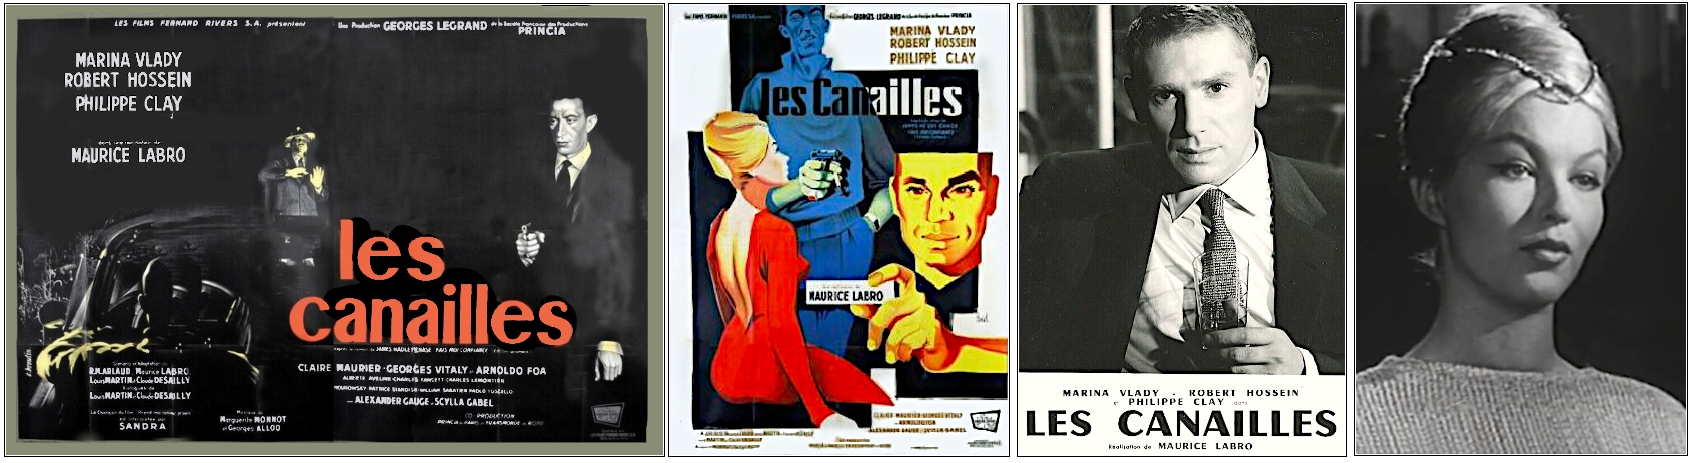 Les canailles (1960)), film de Maurice Labro  - Robert Hossein, Marina Vlady